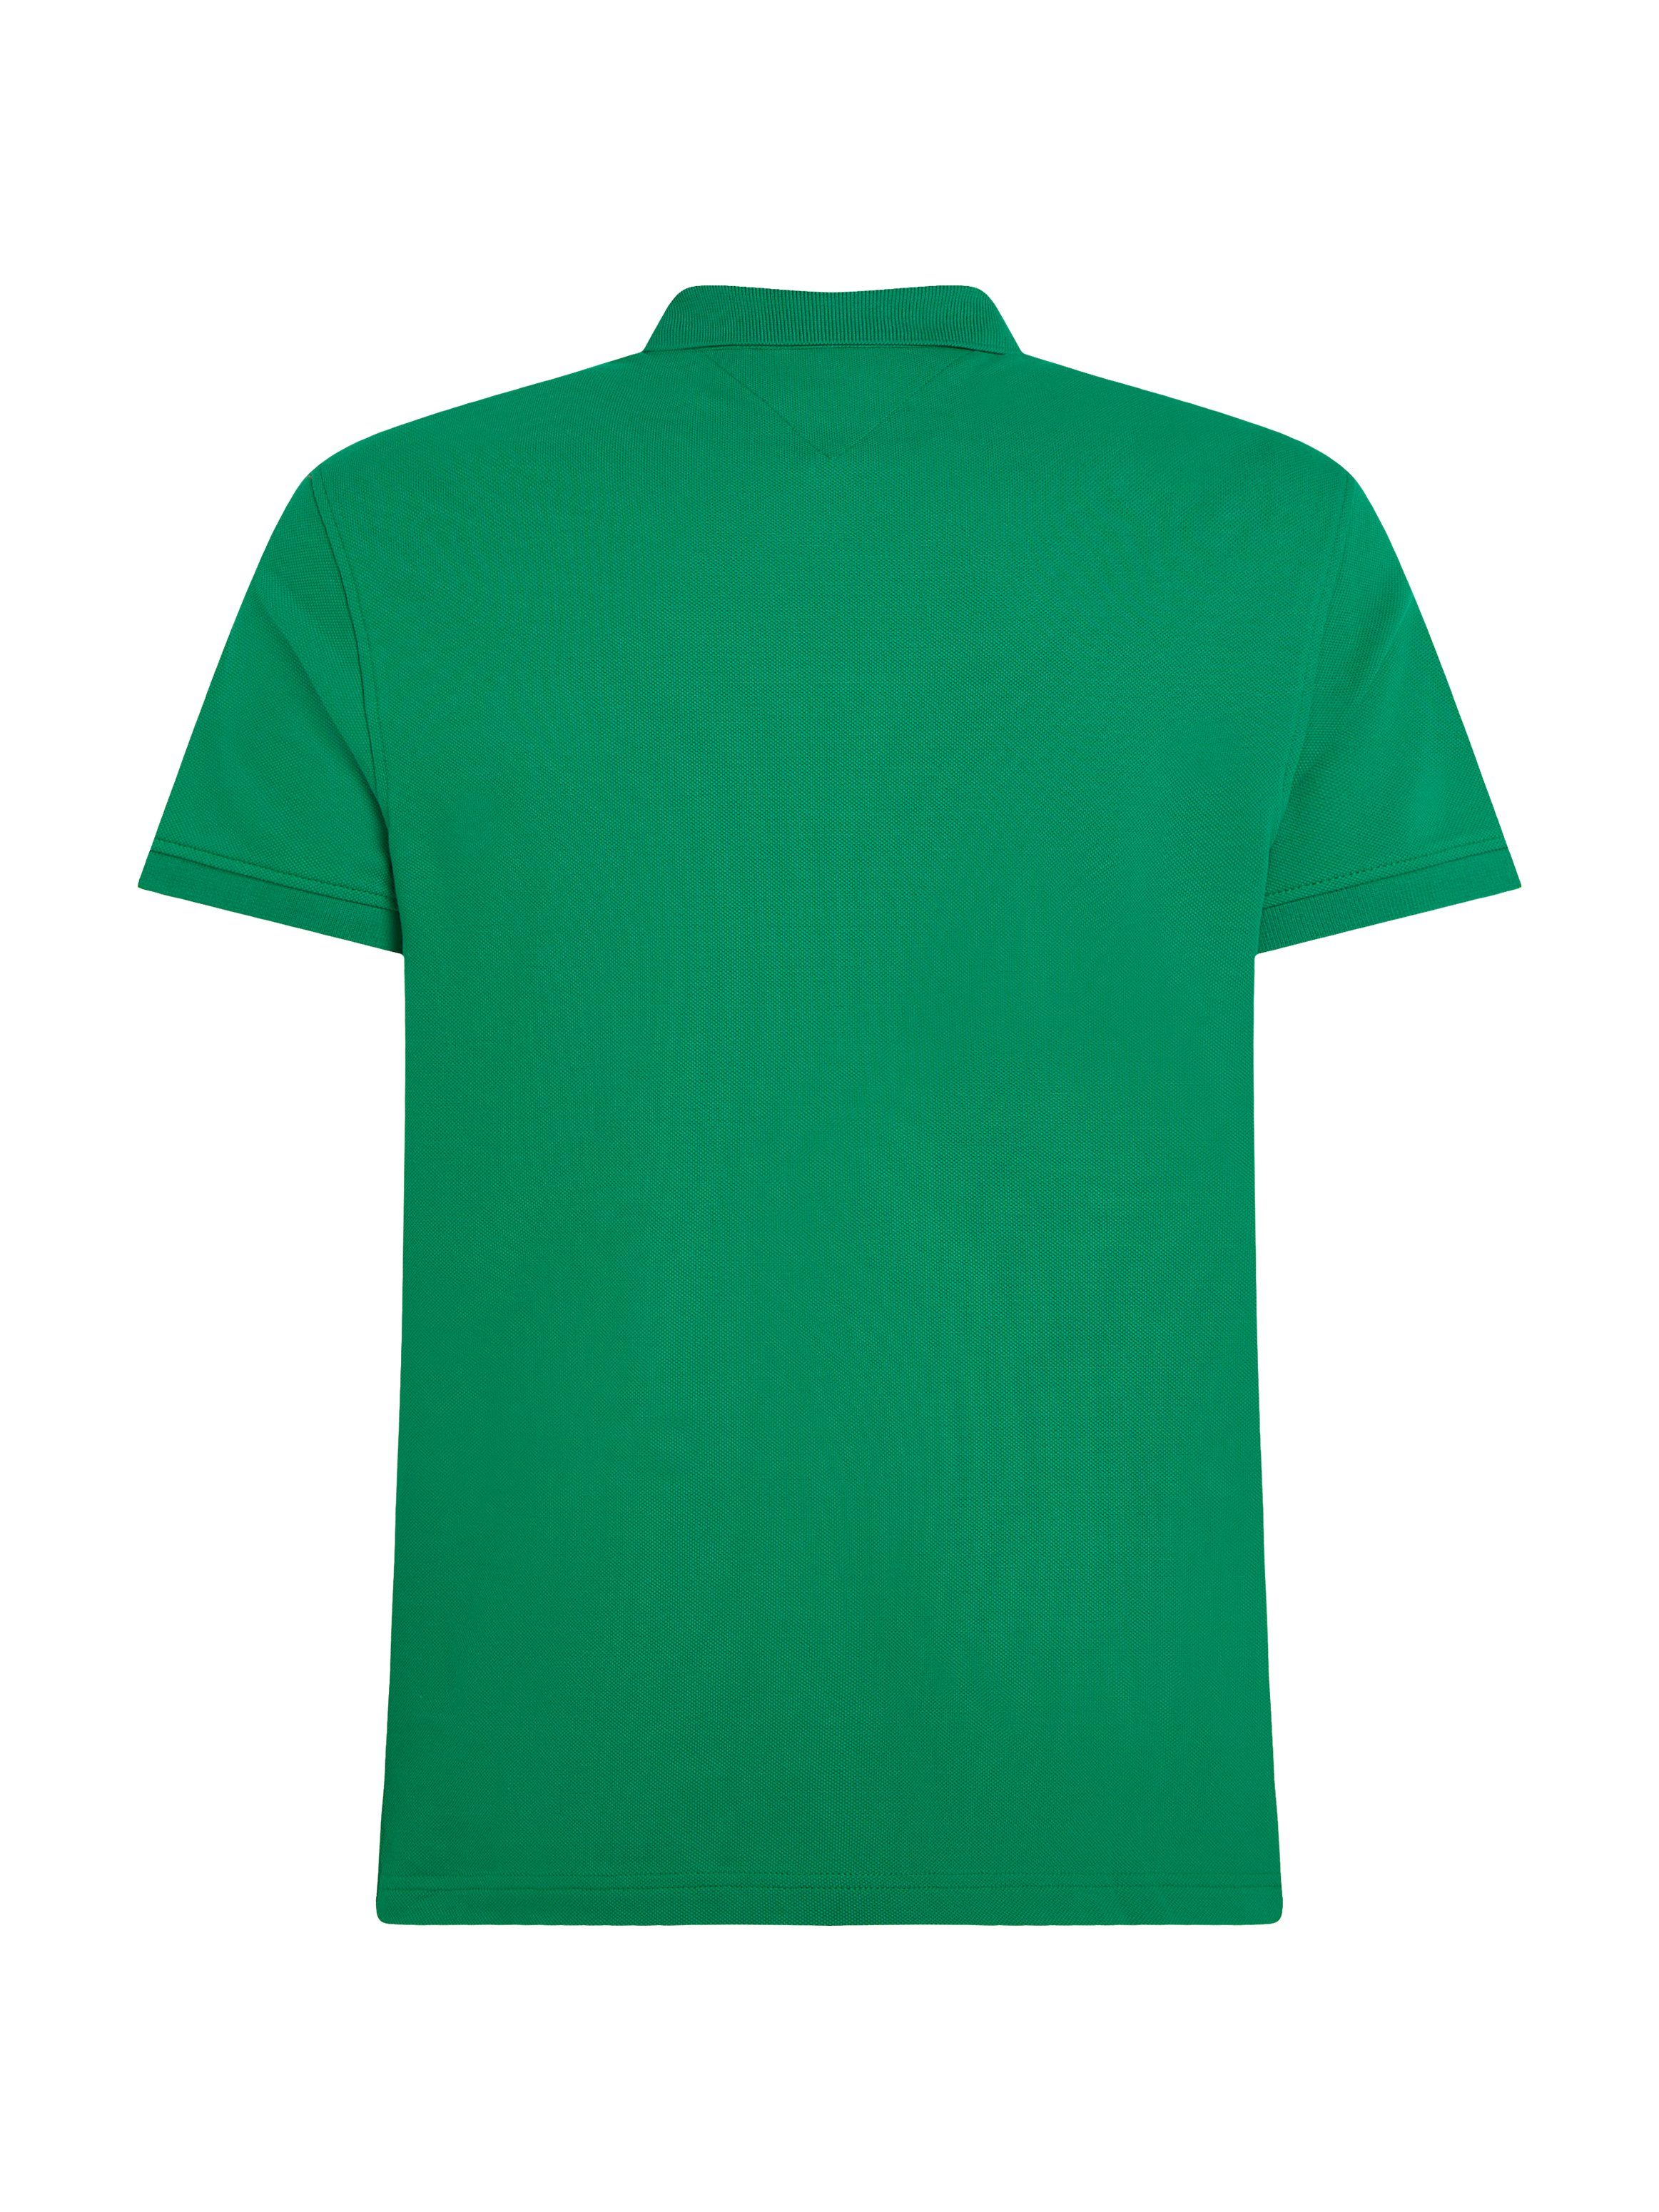 Hilfiger 1985 Olympic SLIM Logostickerei Poloshirt mit Green Tommy POLO